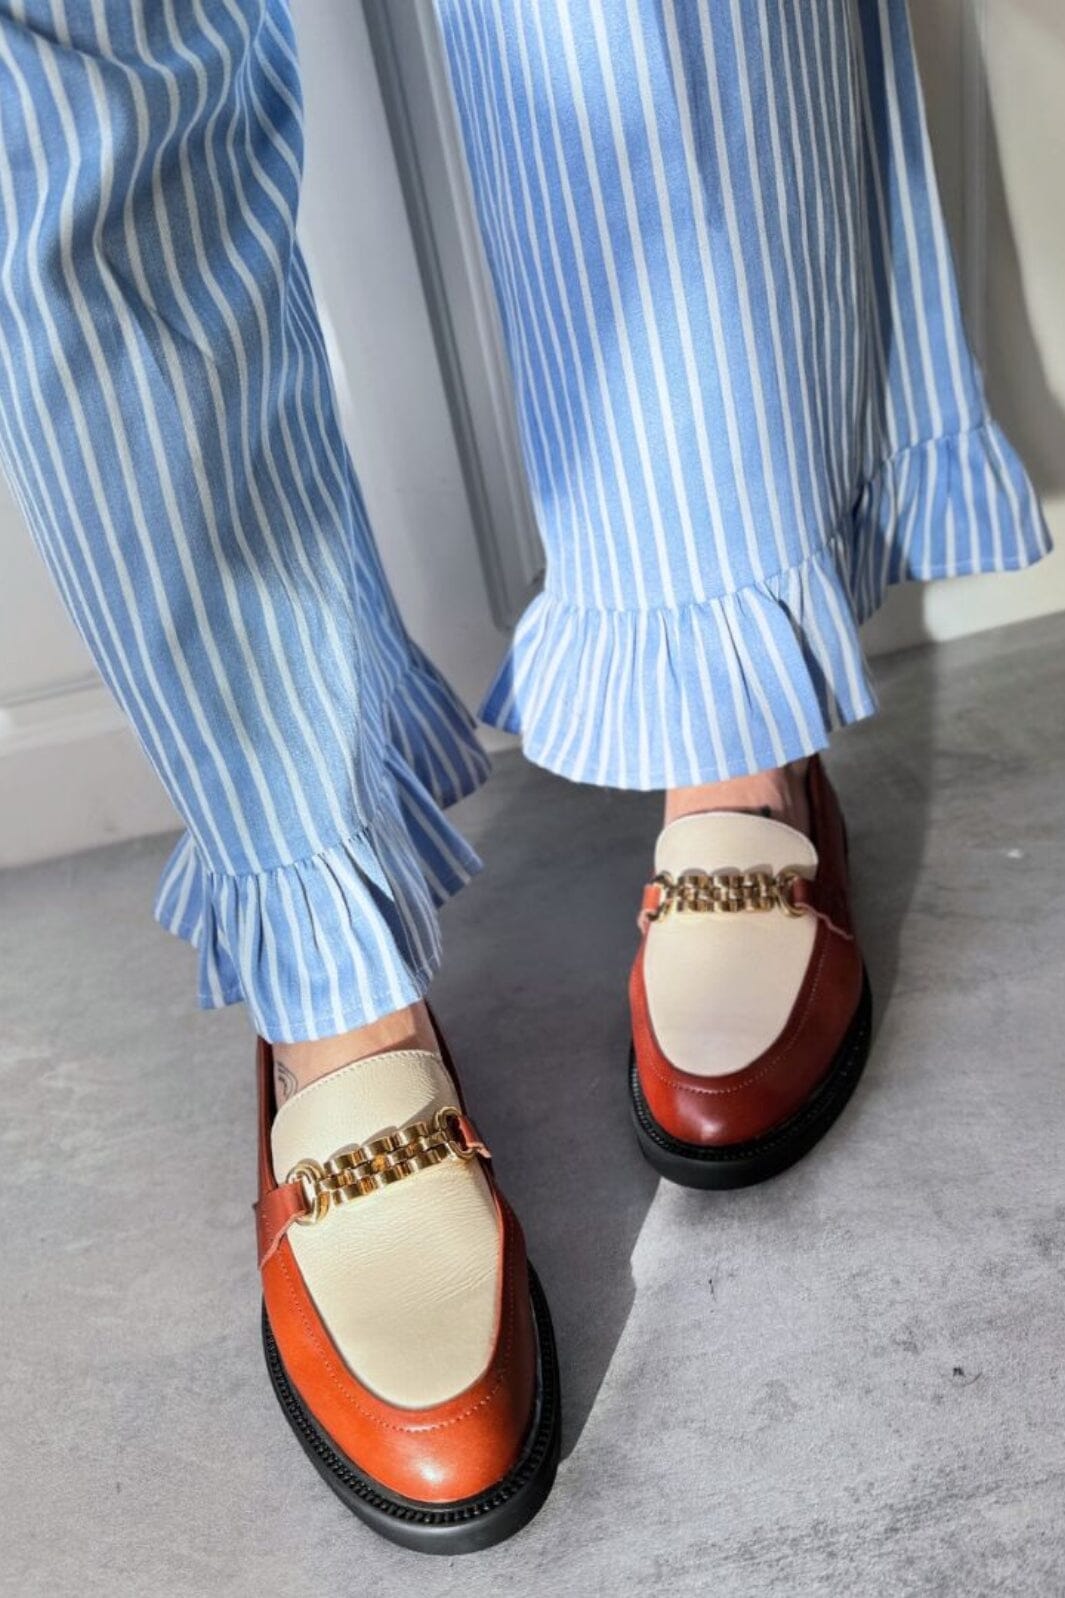 Copenhagen Shoes - Feel Spring - 214 Cognac / Nude Loafers 